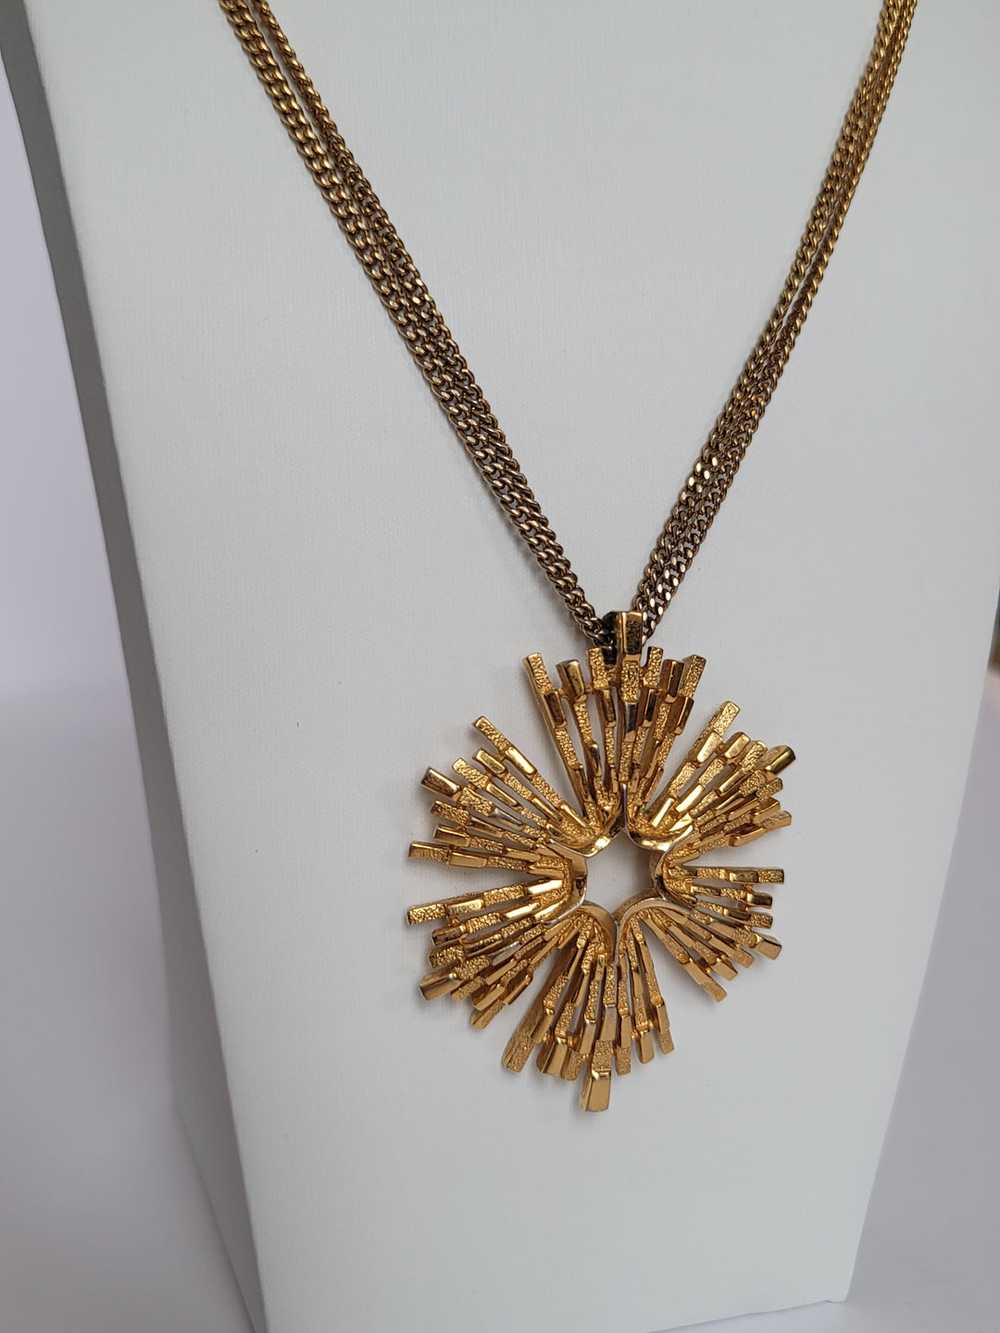 60's Gold -Tone Starburst Pendant Necklace - image 2